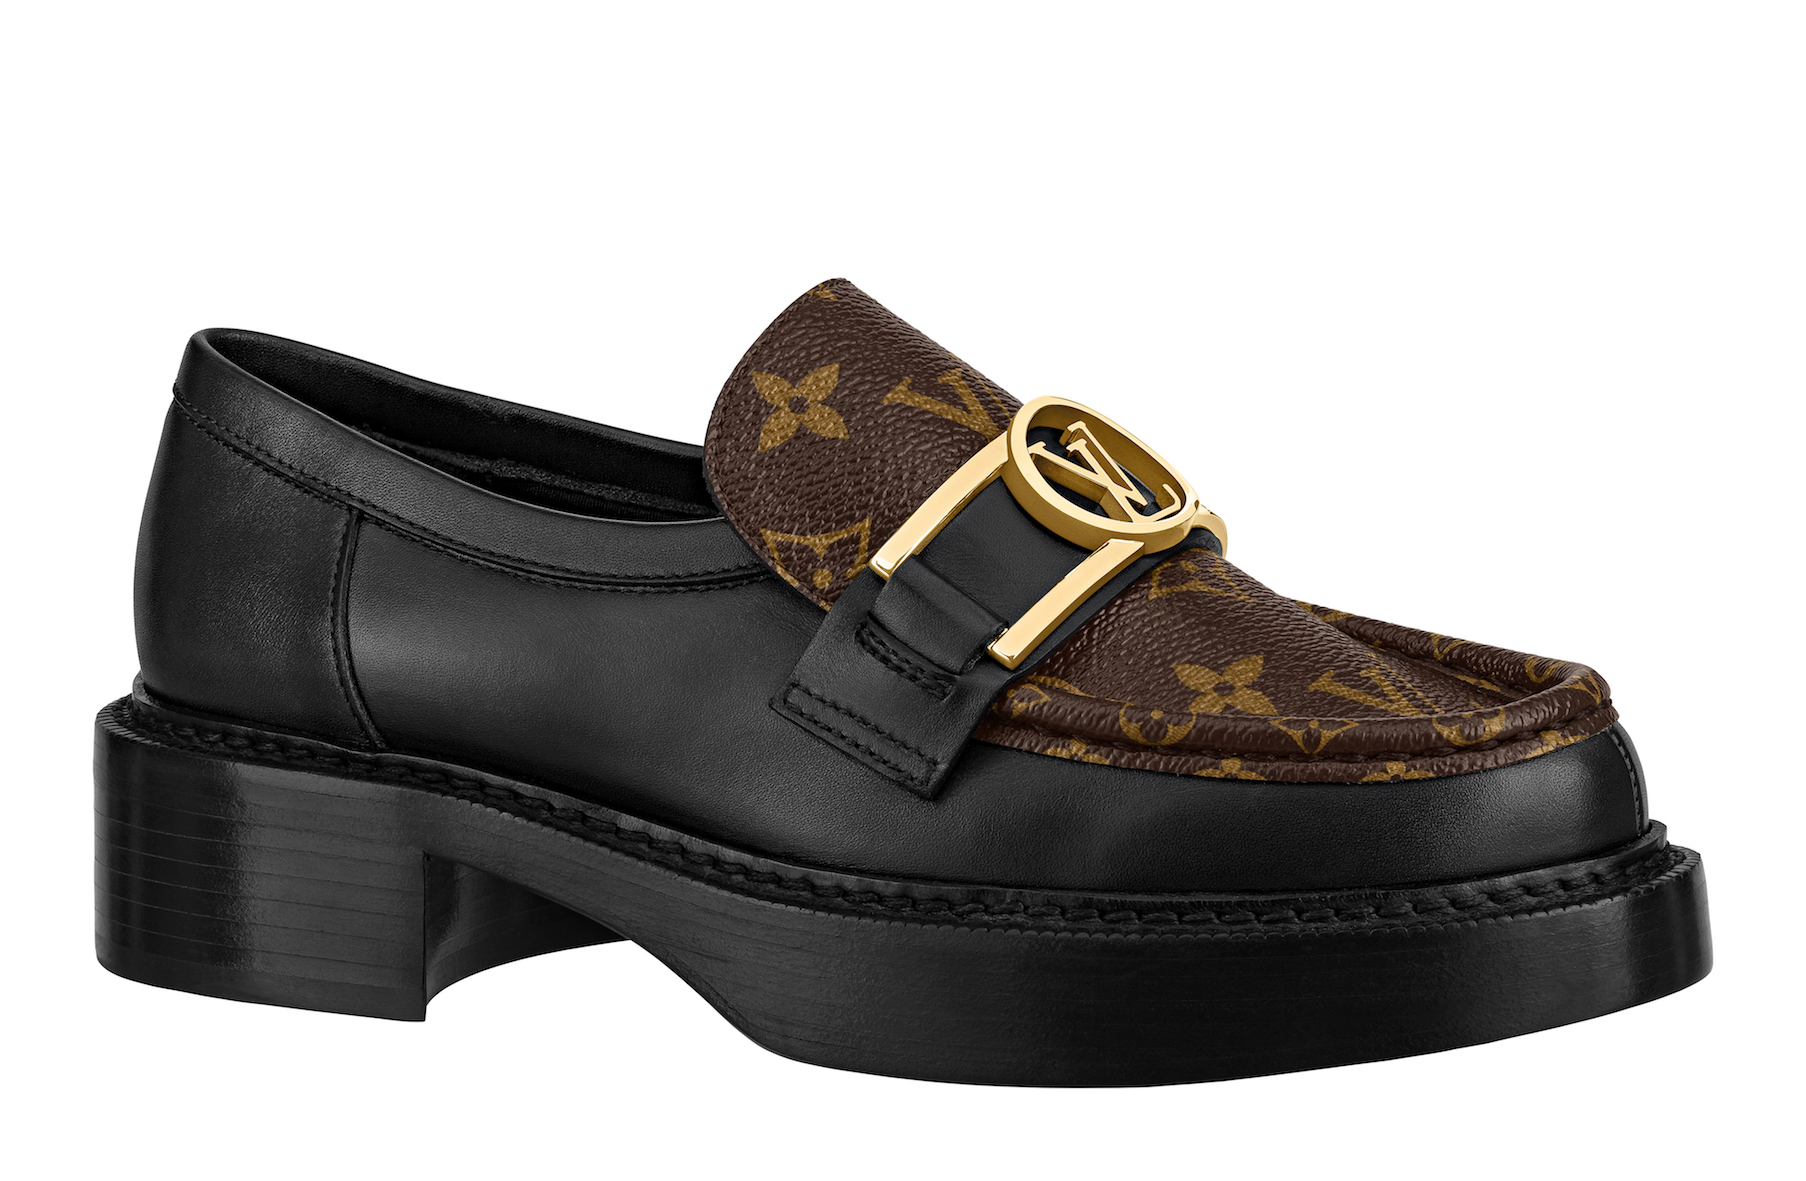 Chaussures Louis Vuitton (Luxe) pour Femme